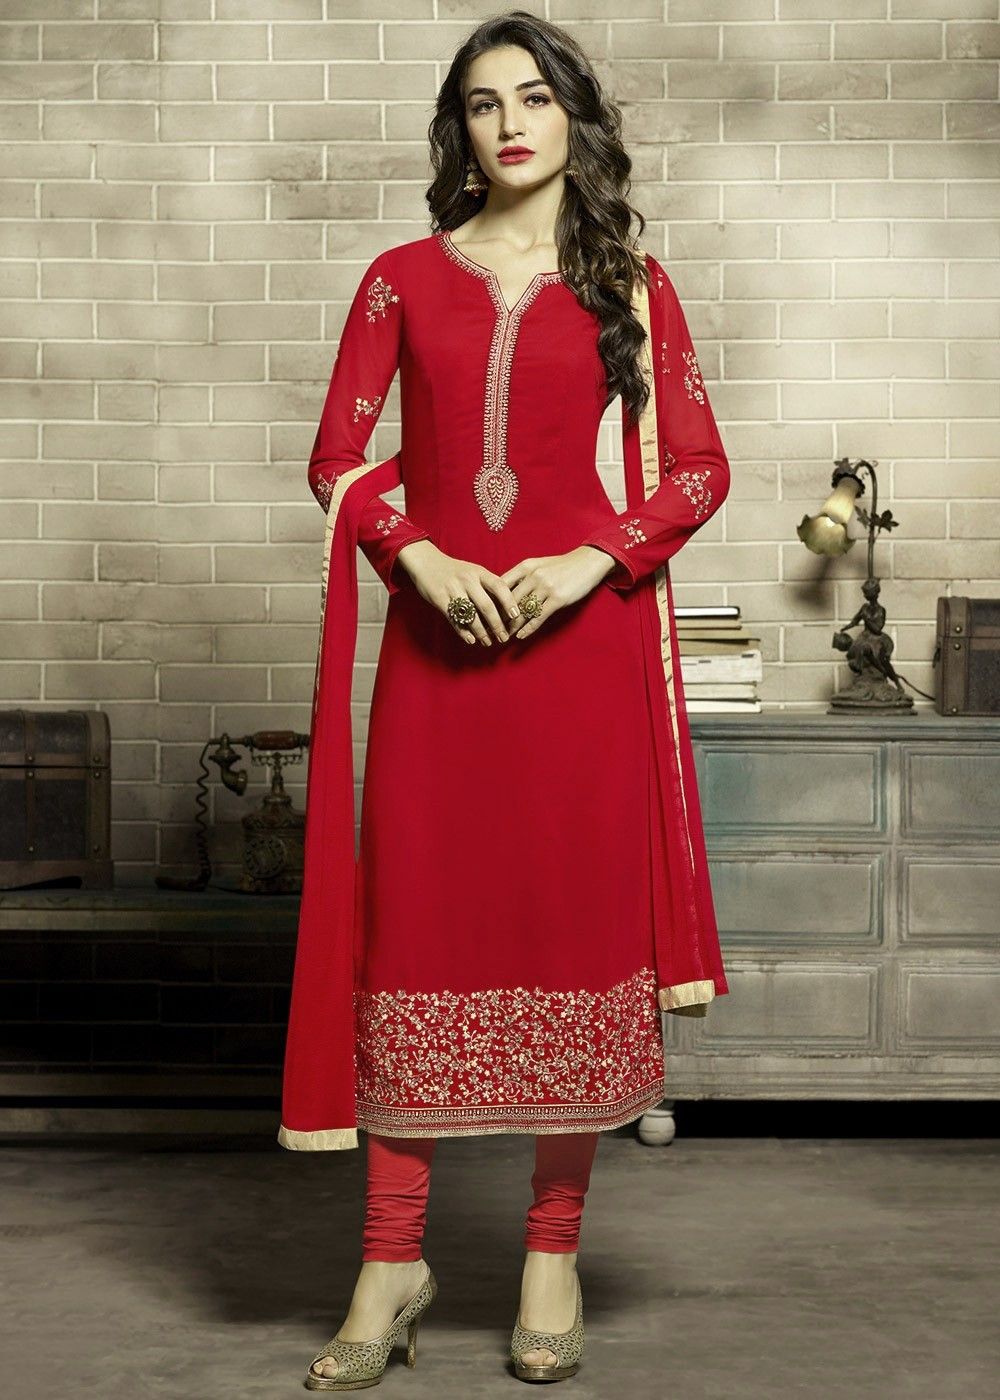 Red Salwar Suit - Buy Red Salwar Suits Online in USA